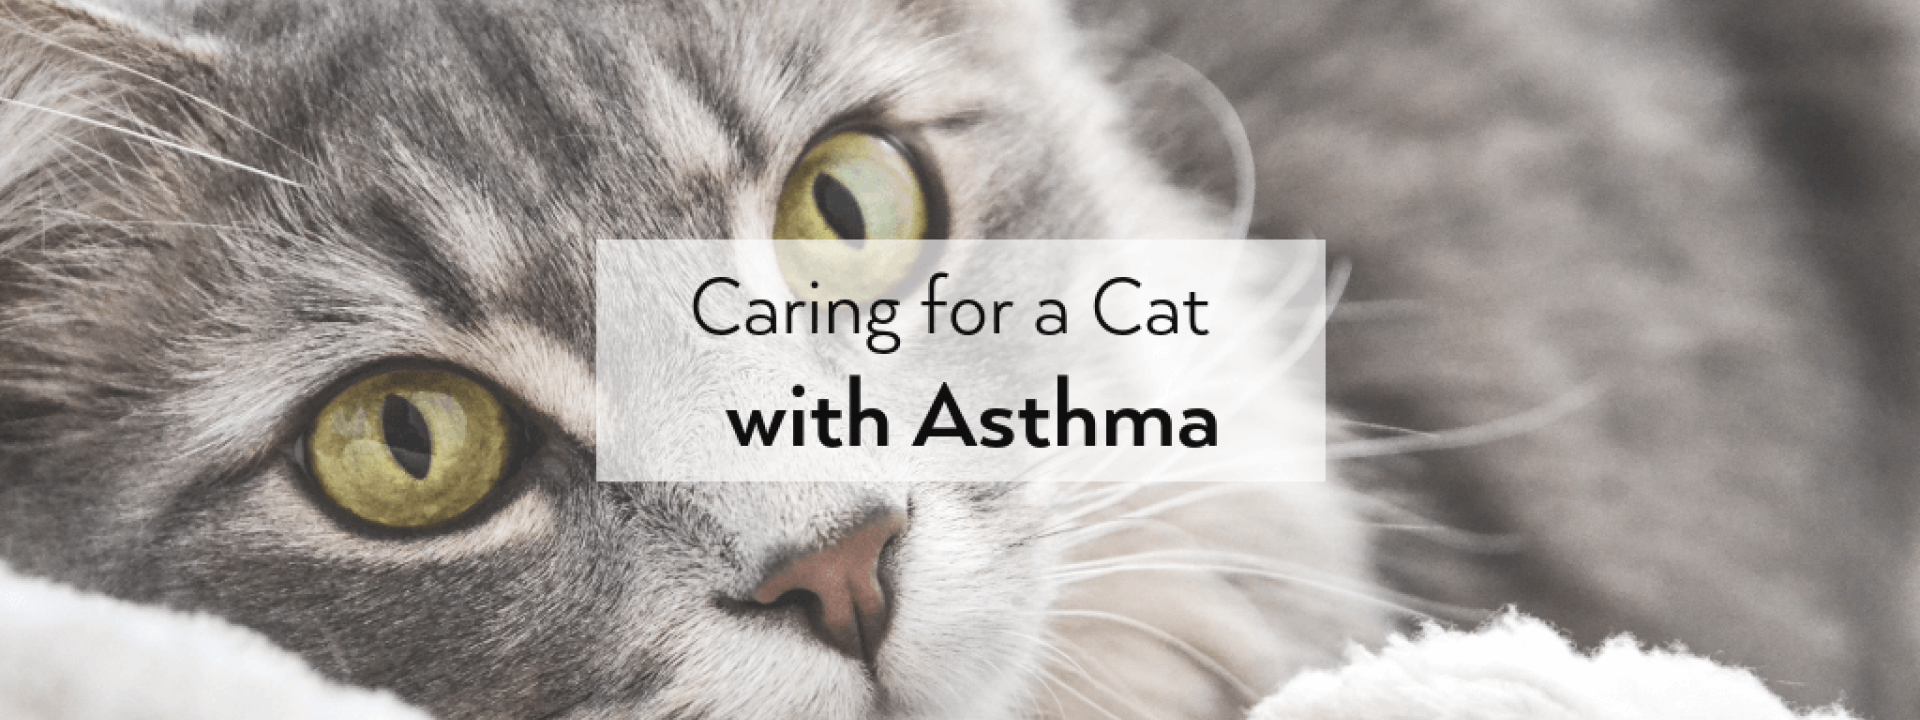 Feline-asthma-blog-header.png